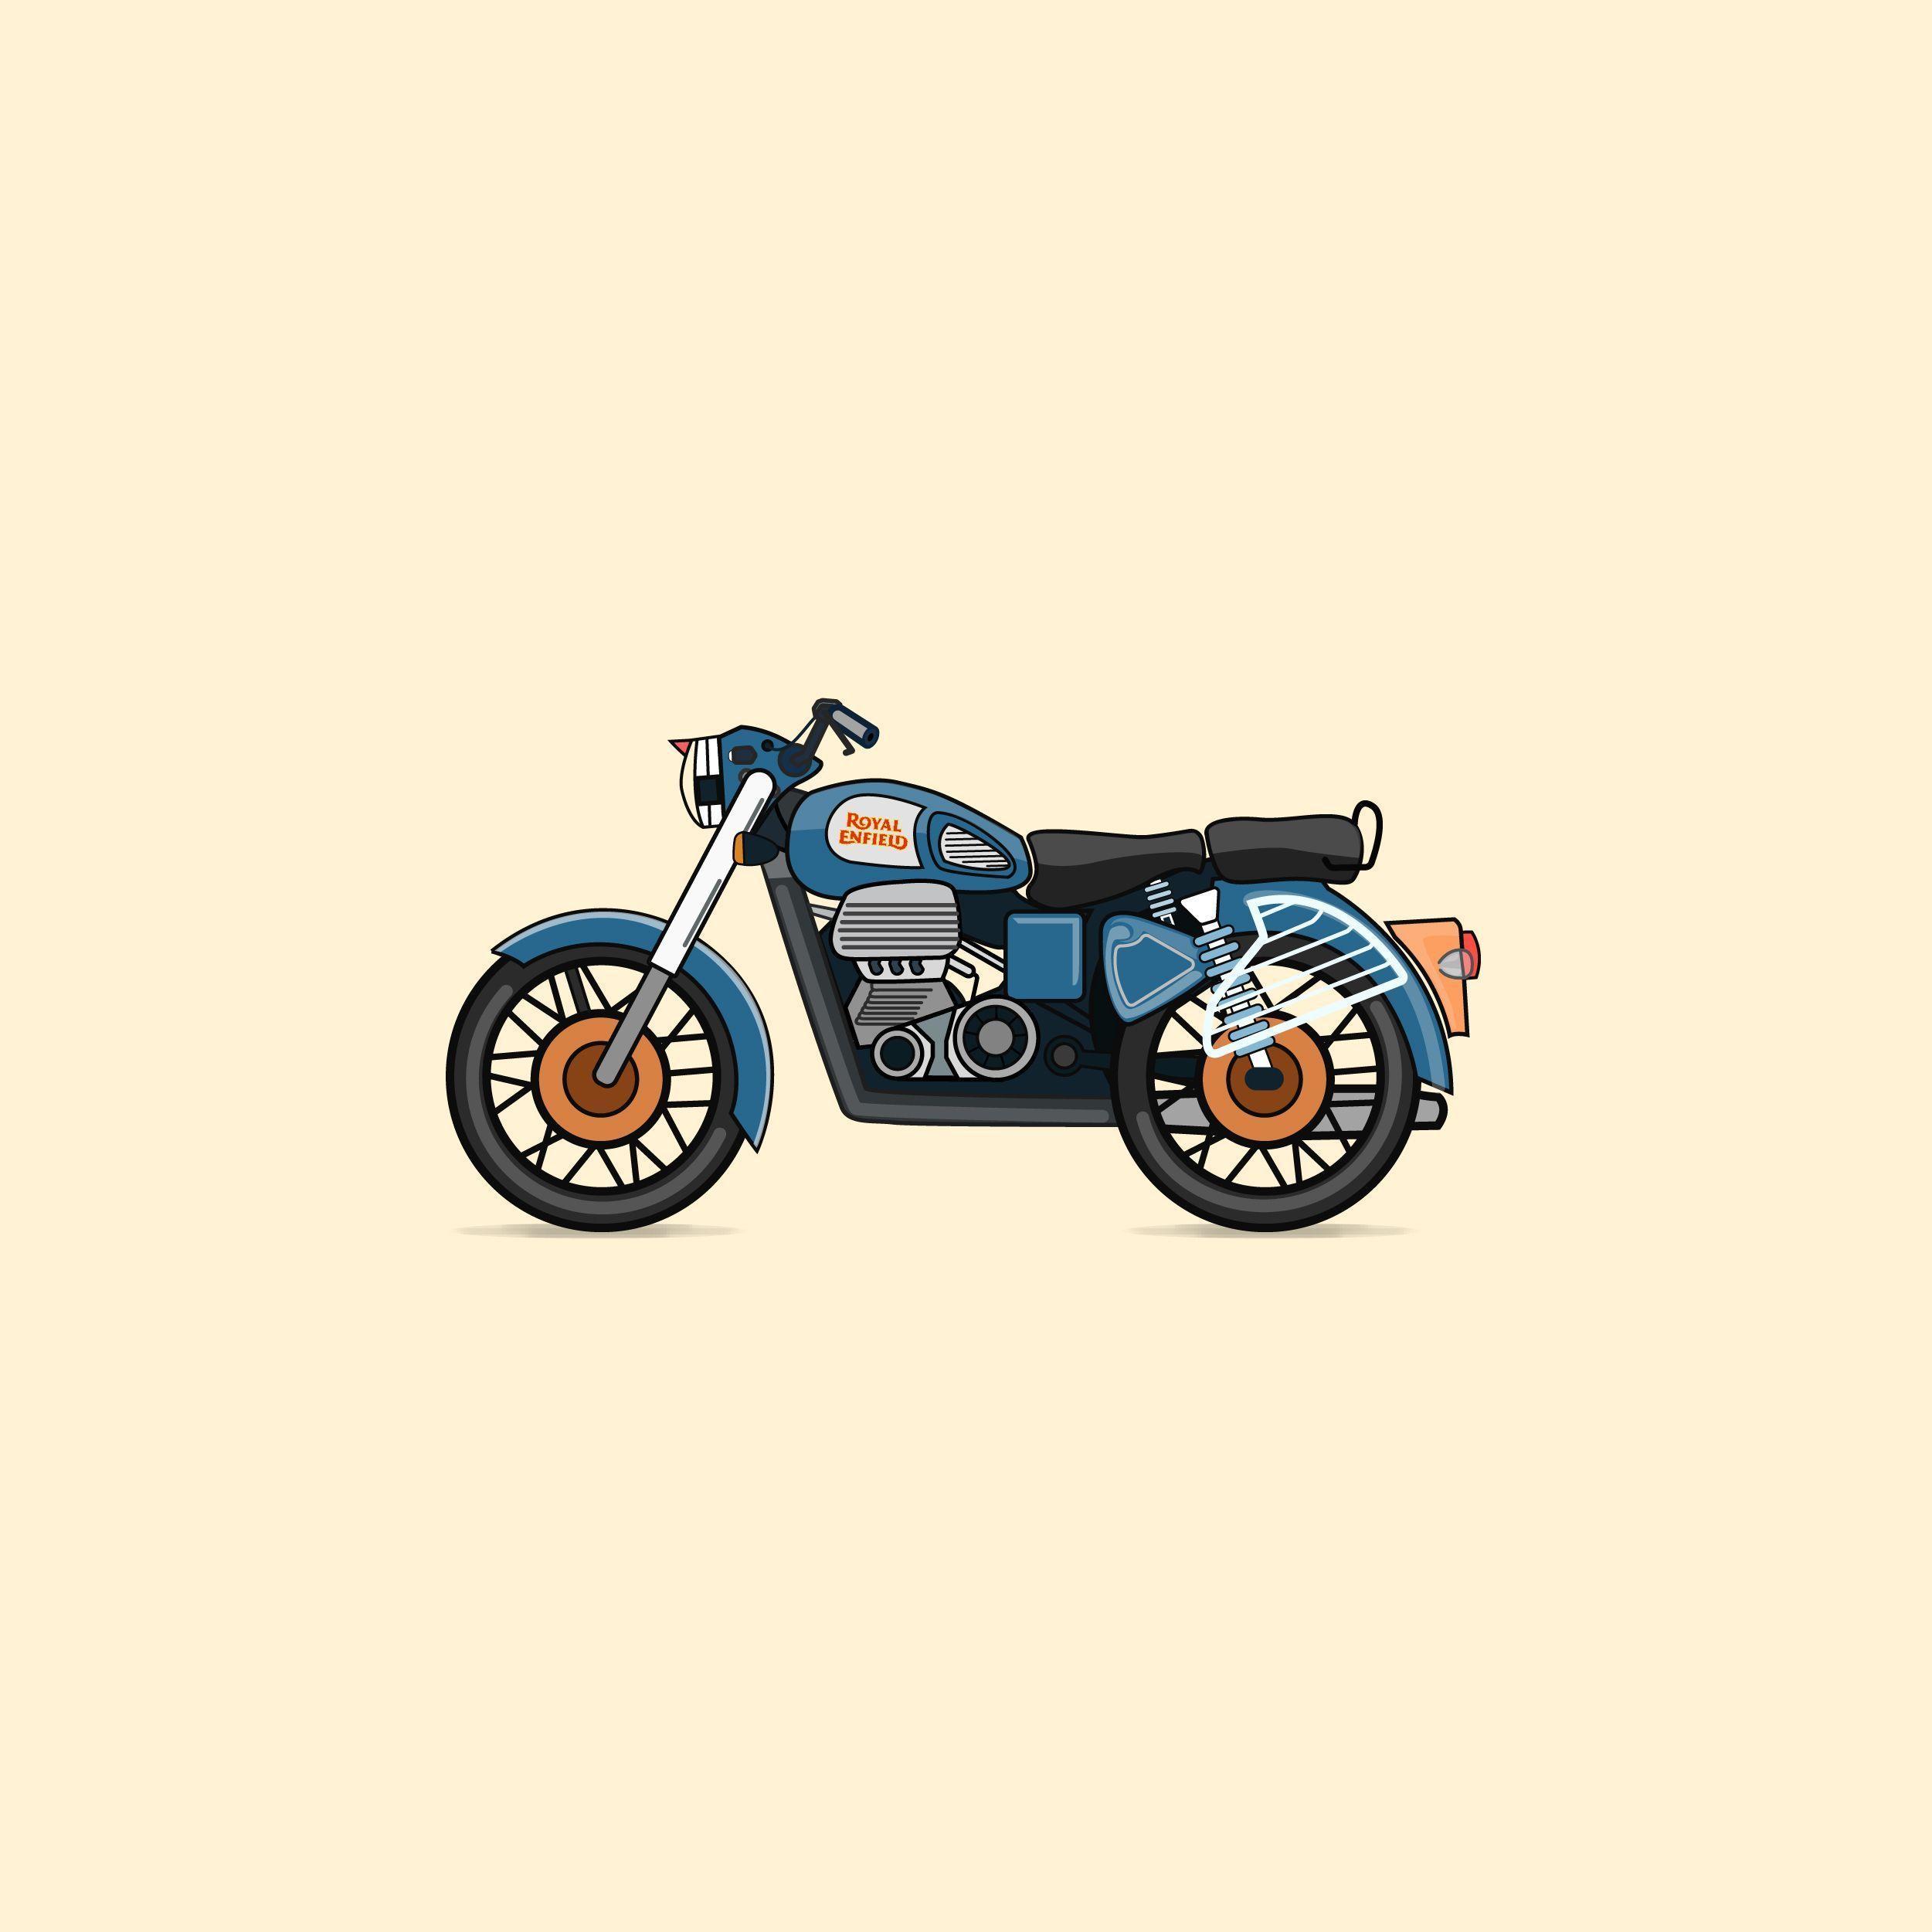 Minimalist Motorcycle Wallpapers - Top Free Minimalist Motorcycle